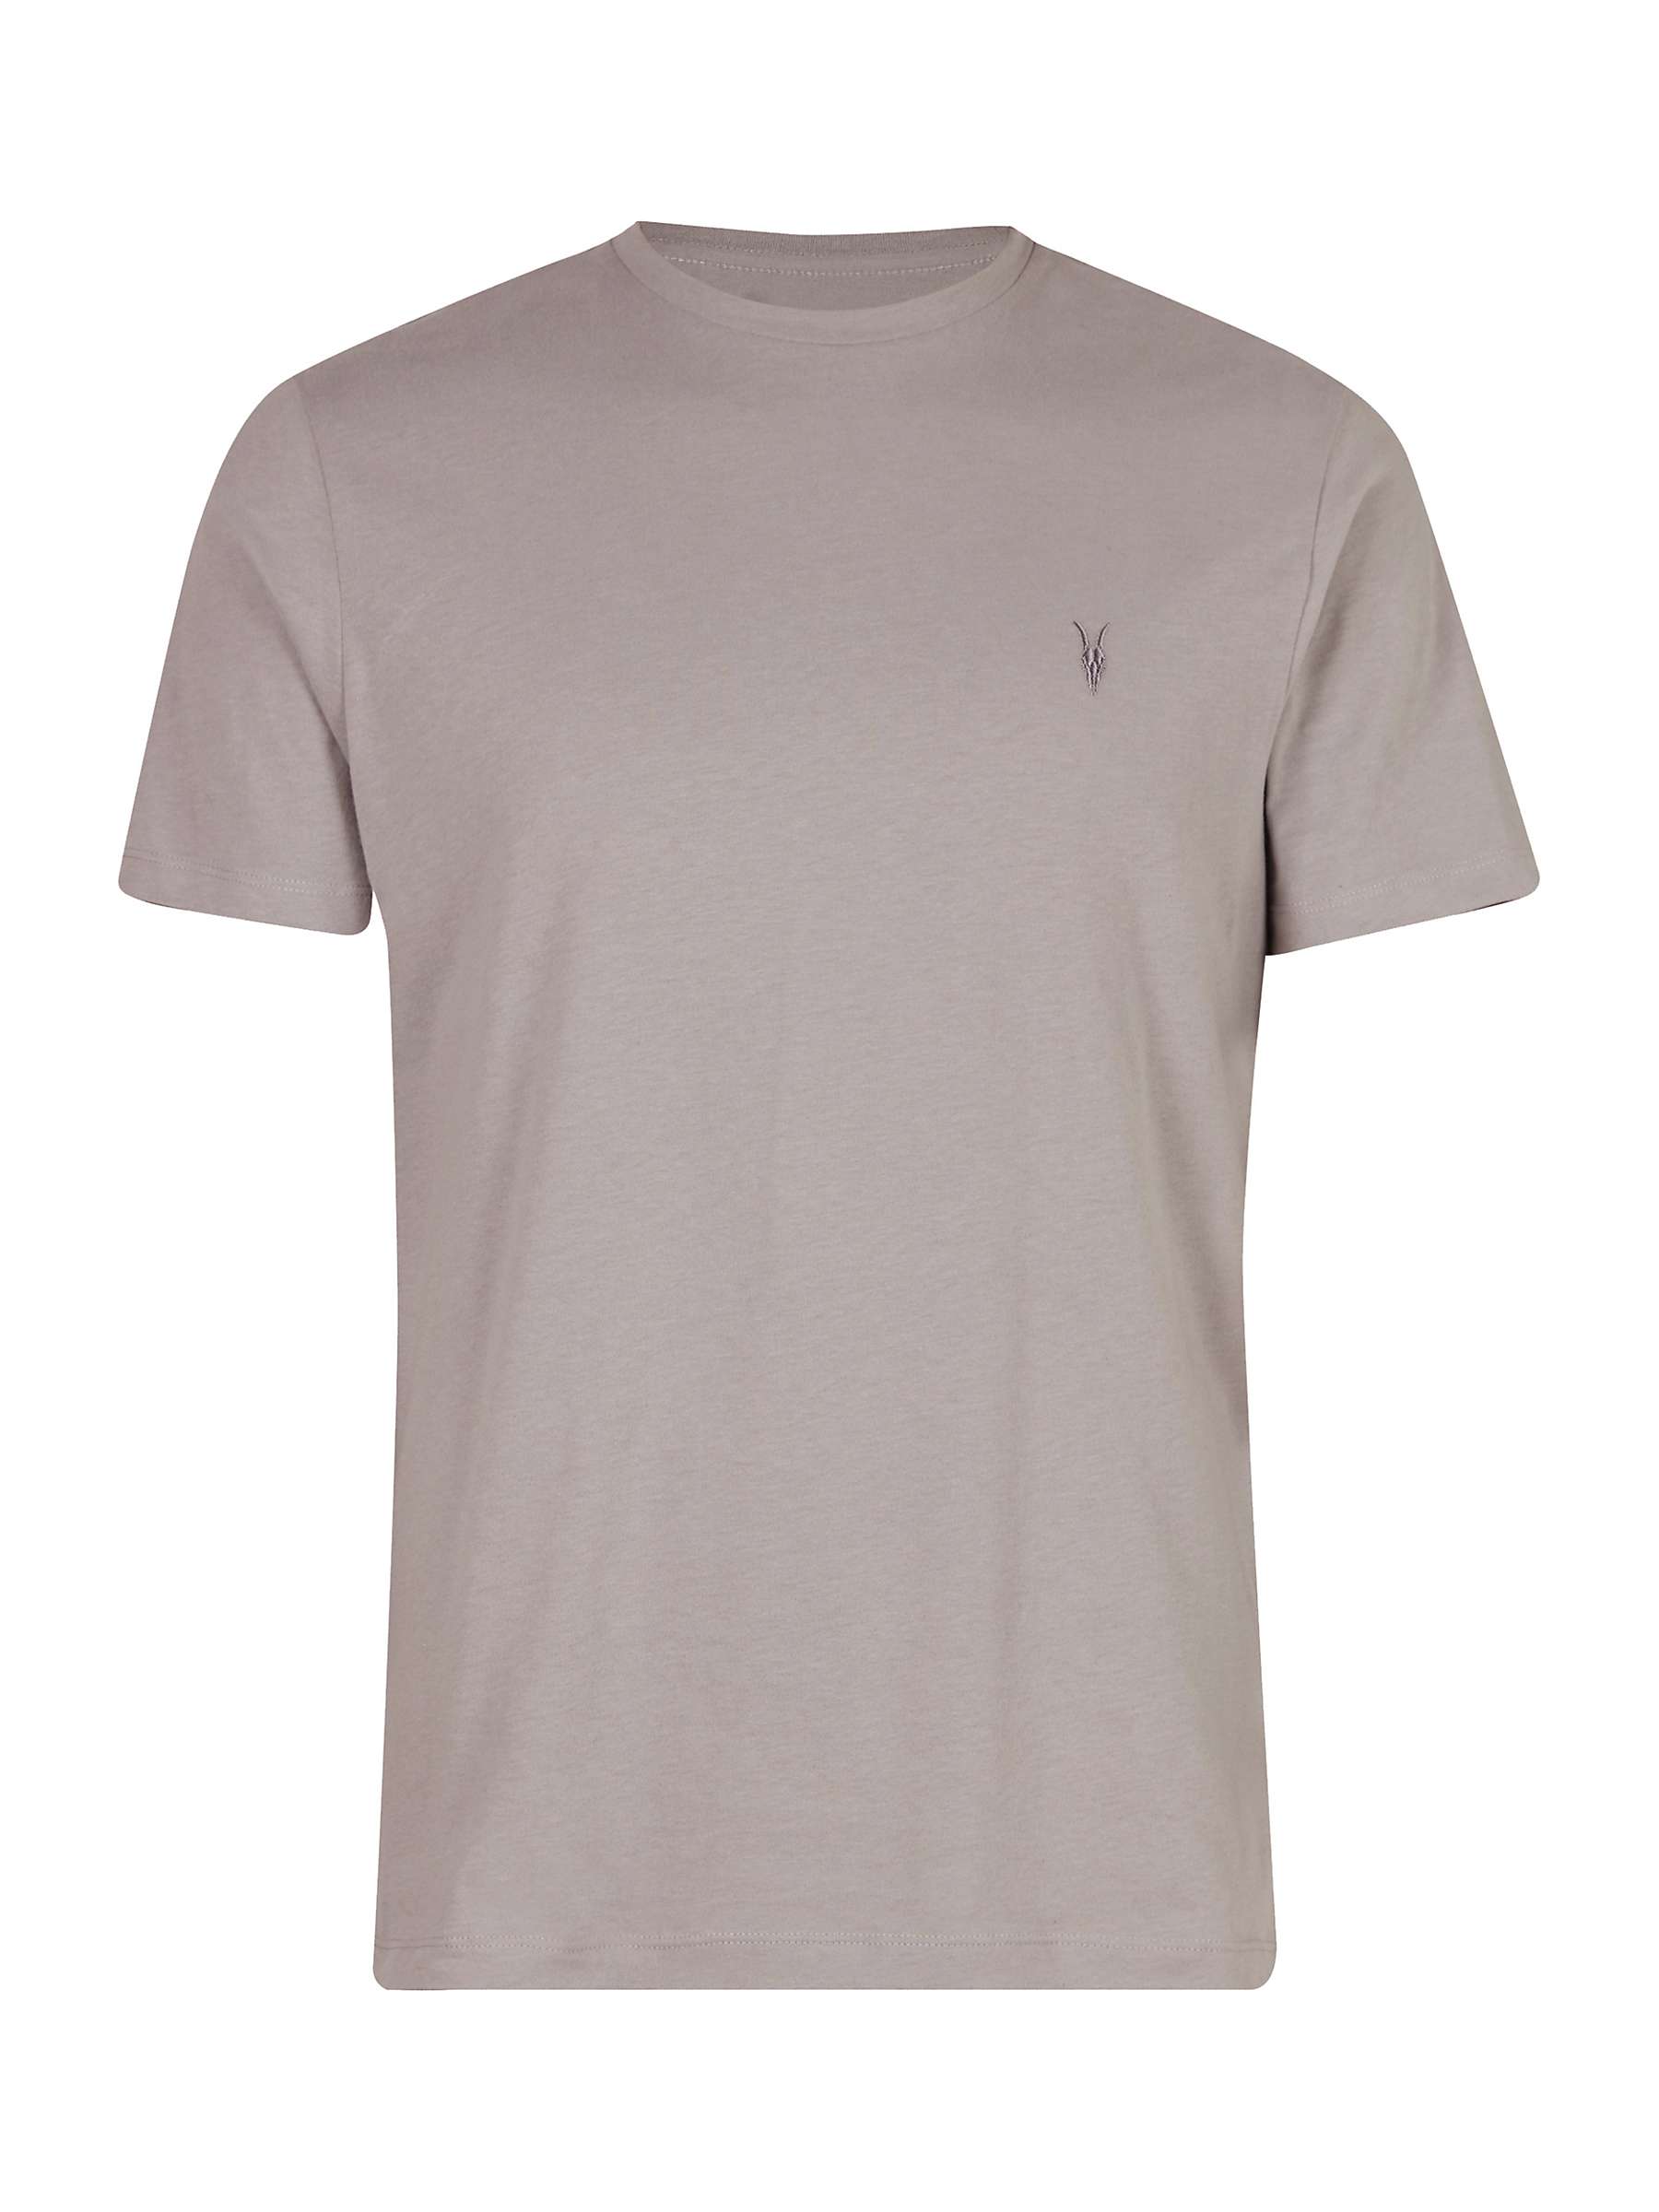 Buy AllSaints Brace Crew Neck Pullover Jersey T-Shirt Online at johnlewis.com